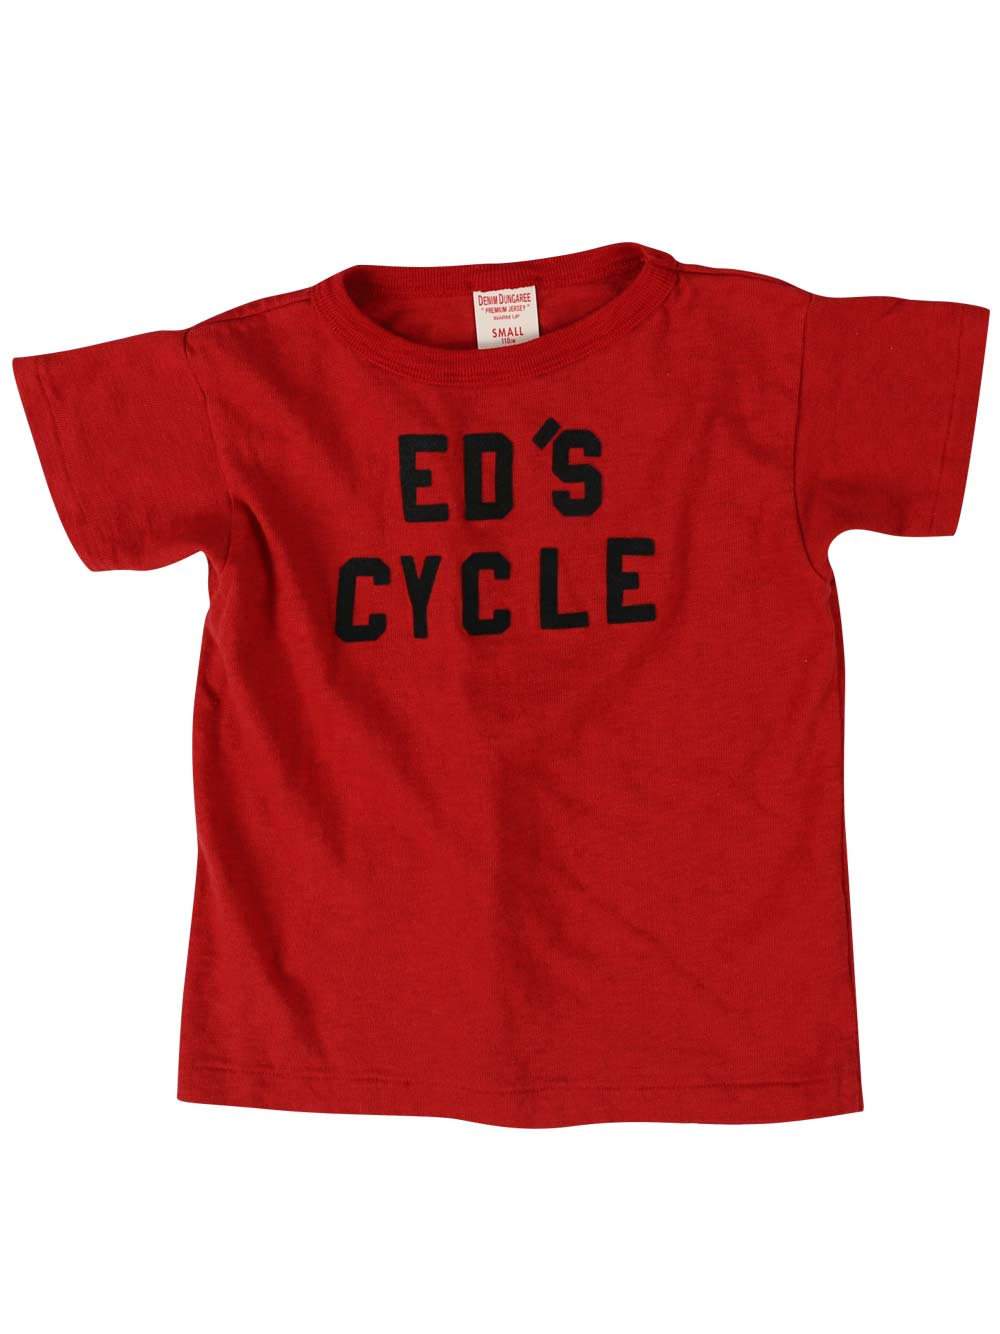 PREORDER: Ed's Cycle T-Shirt